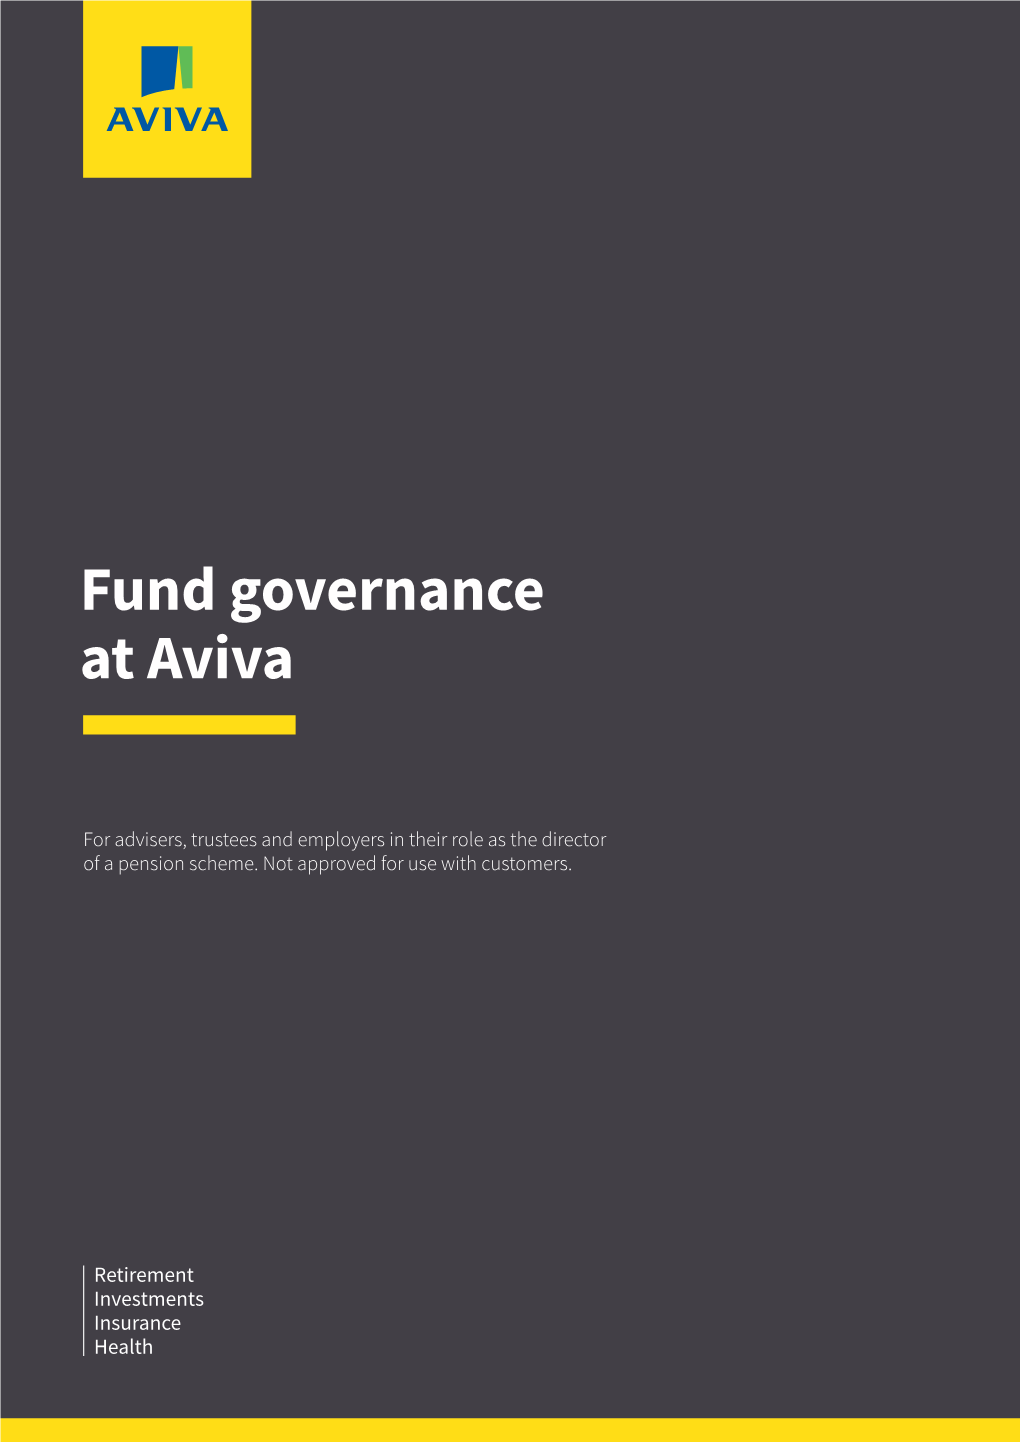 Fund Governance at Aviva